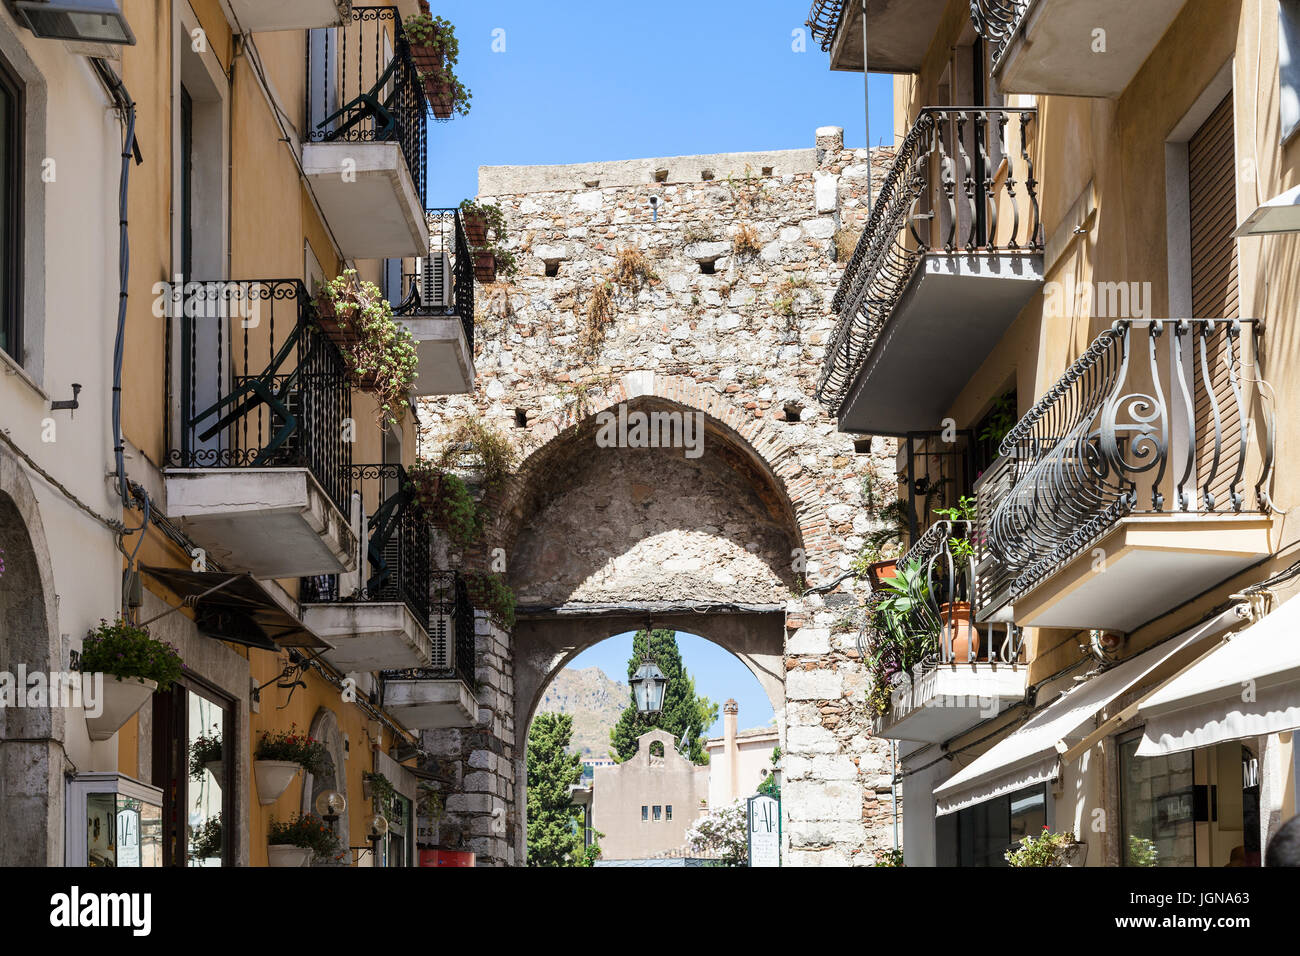 TAORMINA, ITALY - JUNE 29, 2017: medieval arch of old gateway Porta Catania in Taormina city. Taormina is resort town on Ionian Sea in Sicily Stock Photo